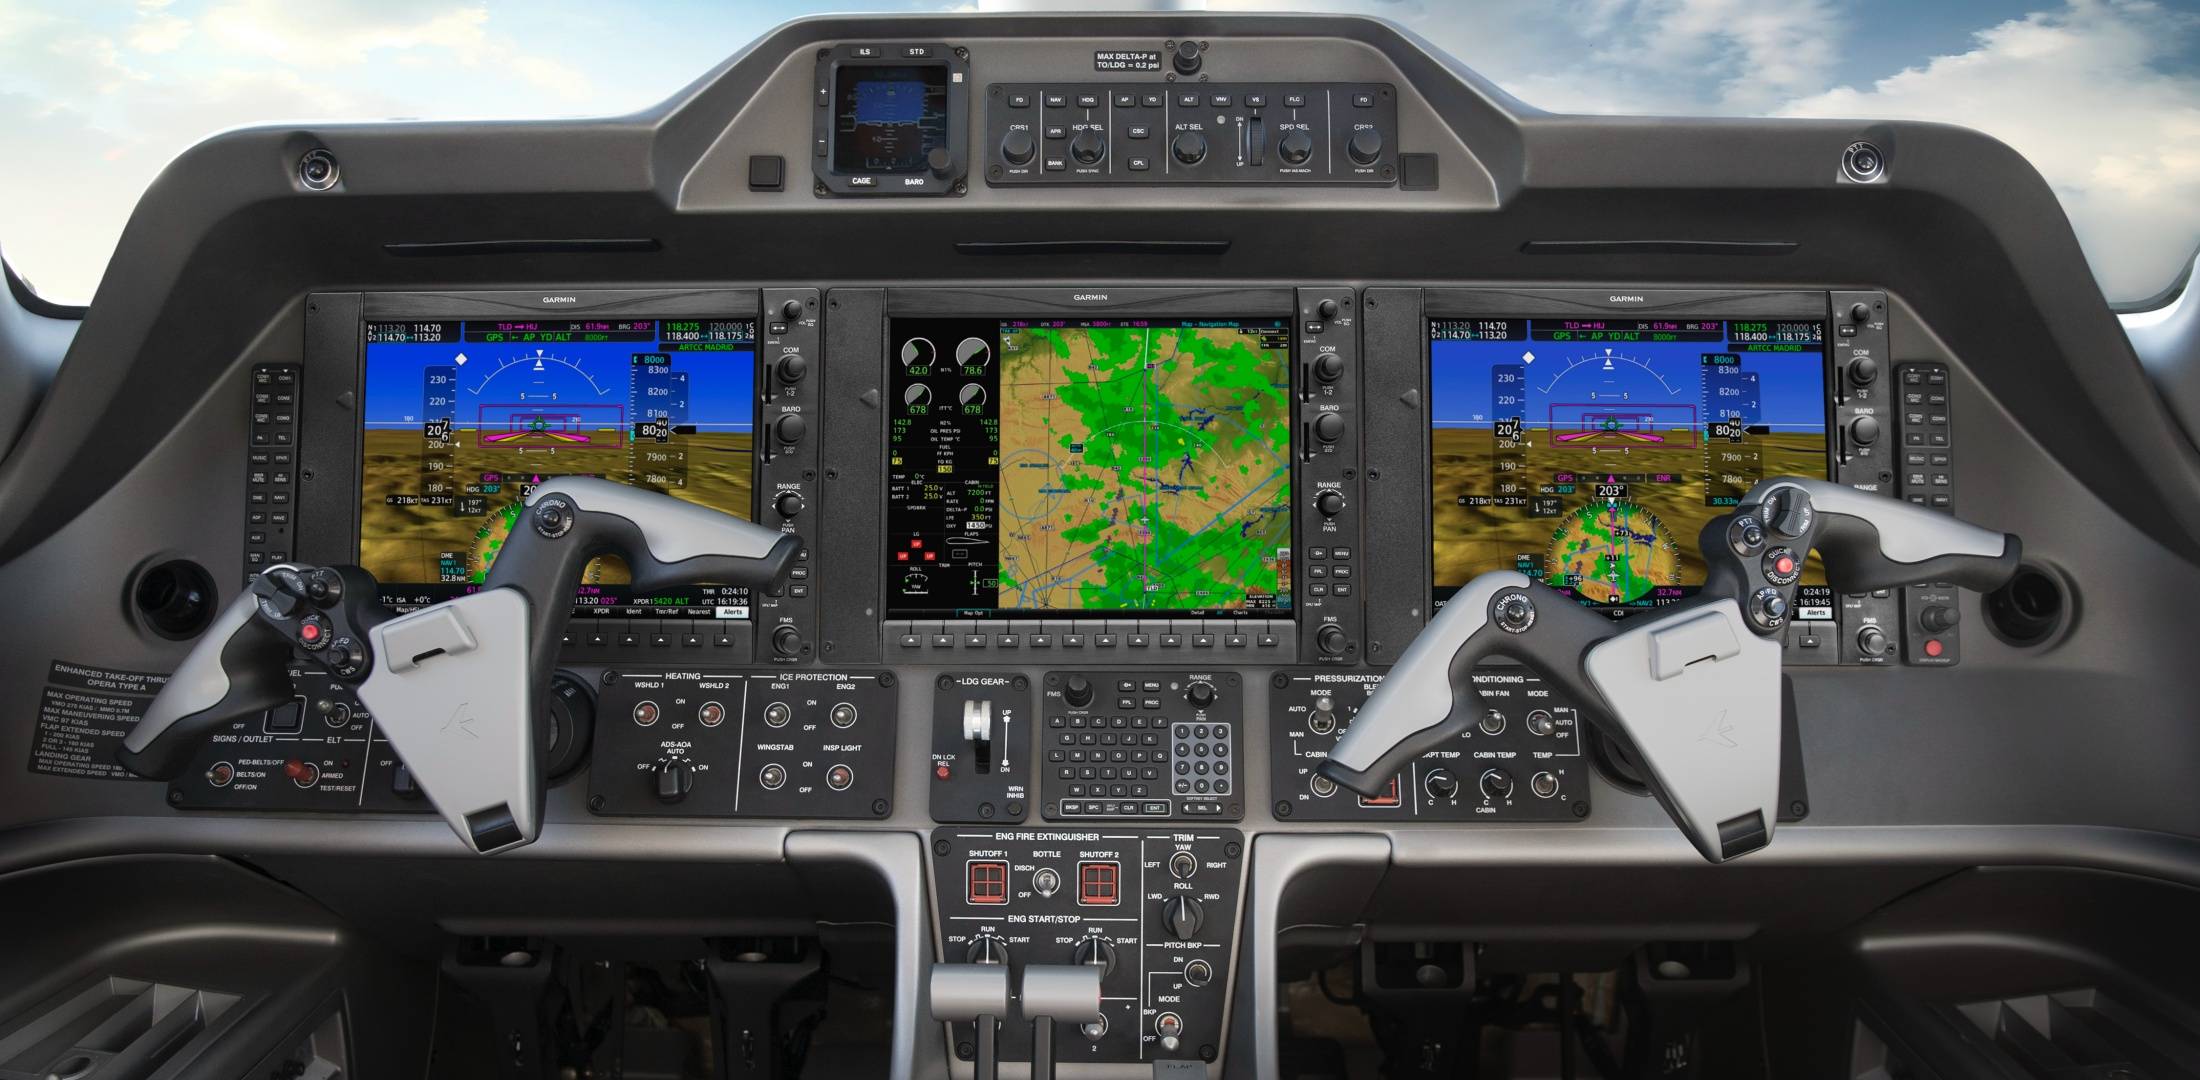 Garmin's G1000 NXi avionics suite in an Embraer Phenom.